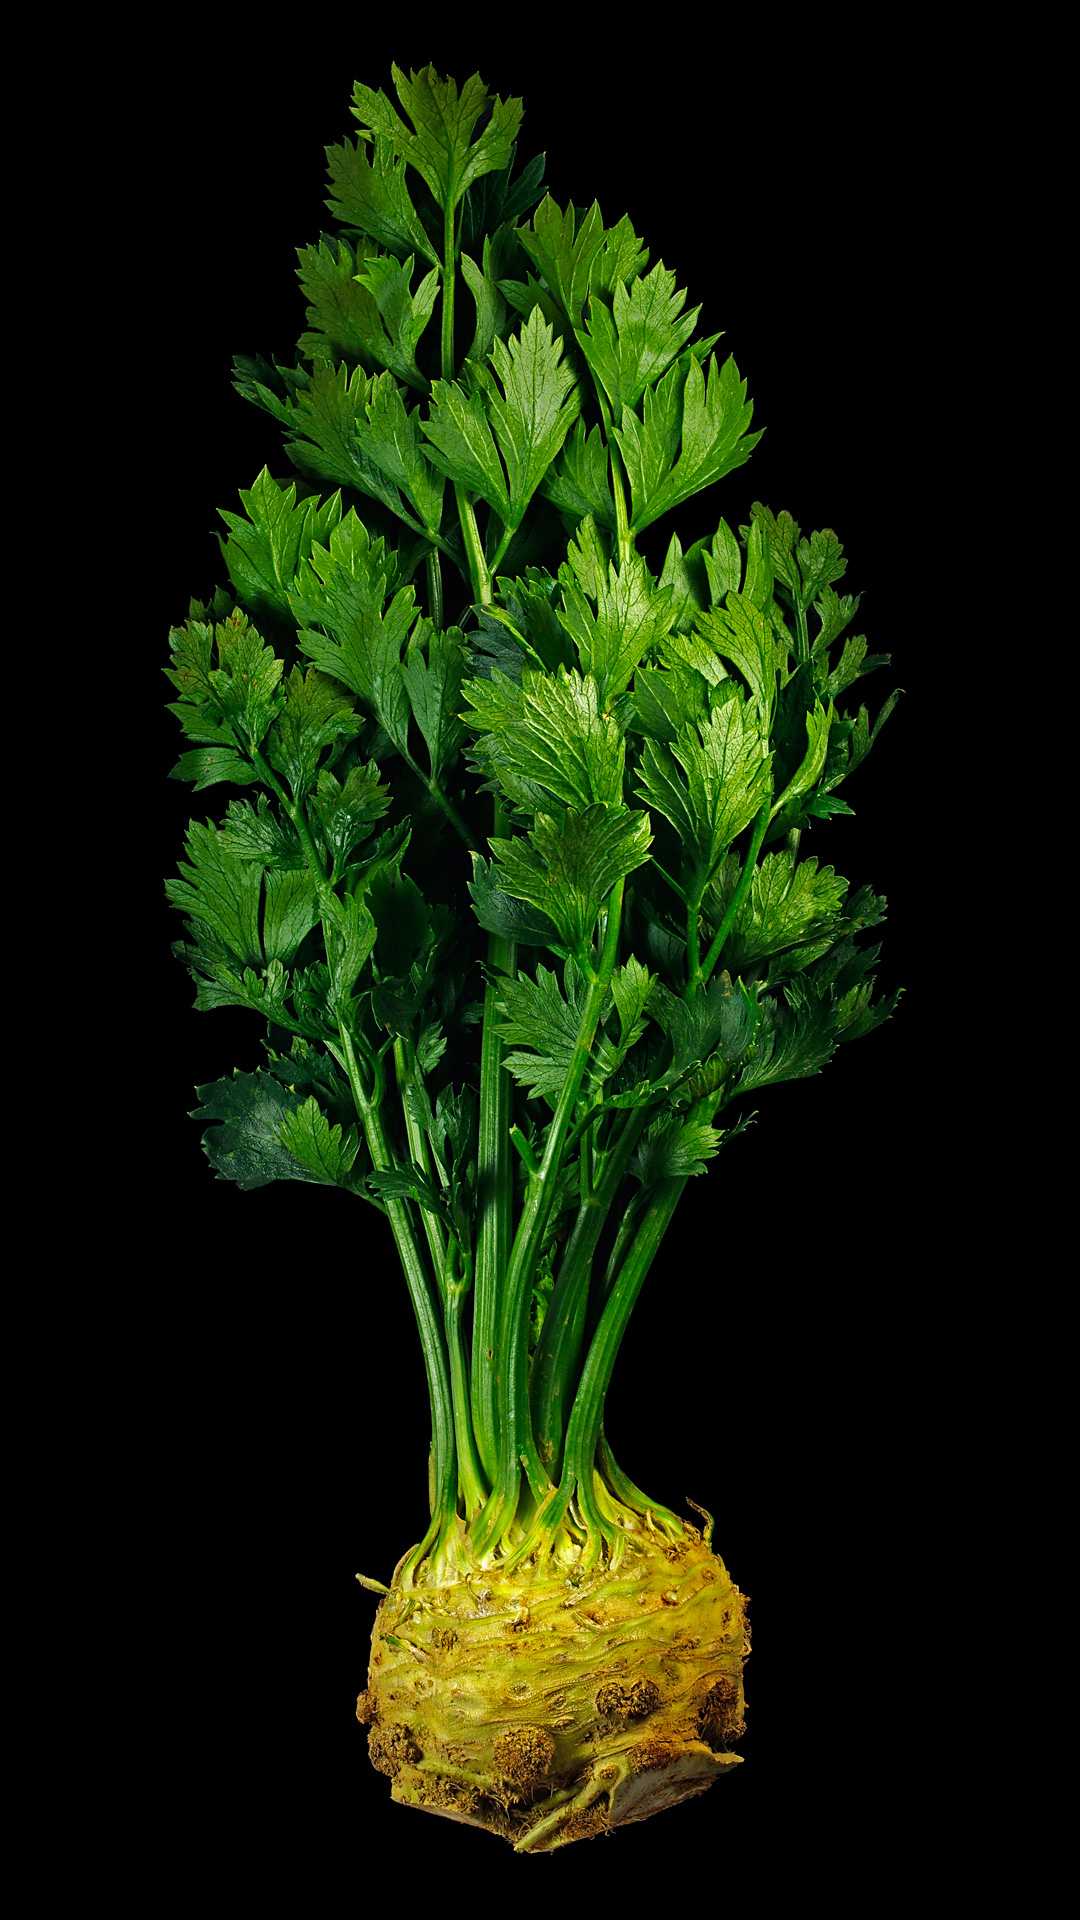 Celery root: Apium graveolens var. rapaceum